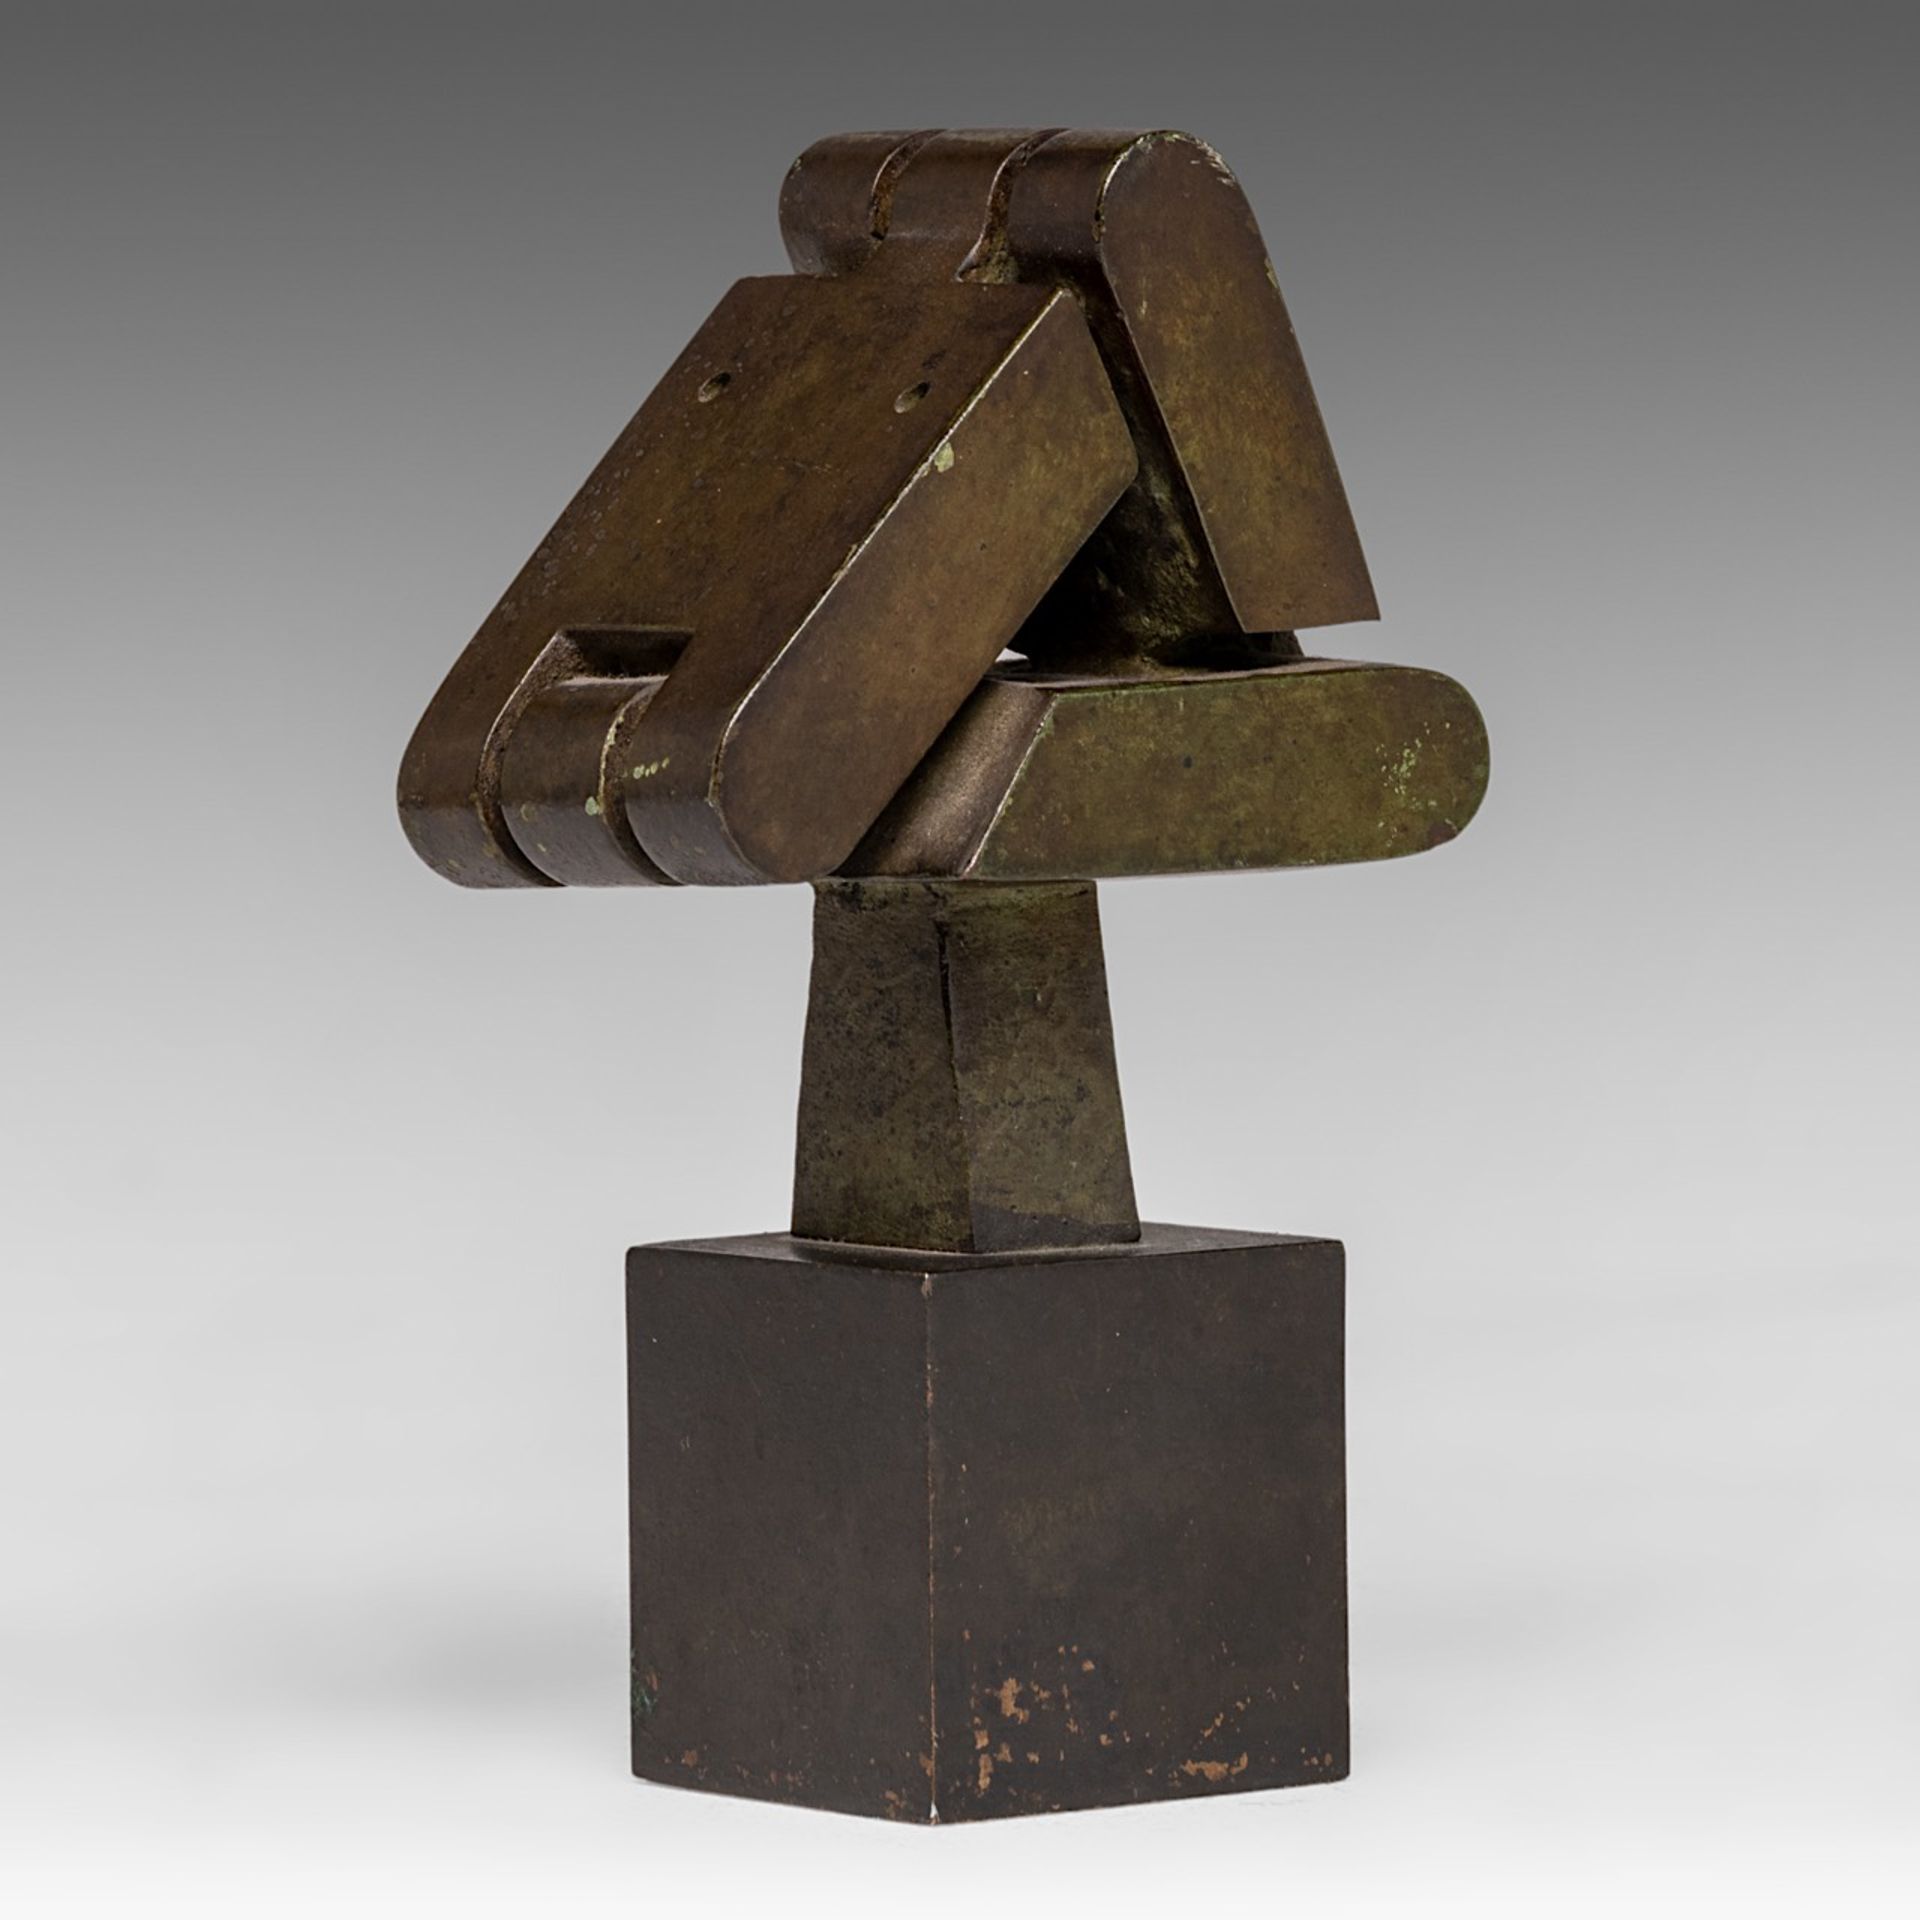 Sorel Etrog (1933-2014), untitled, patinated bronze, H 14 cm